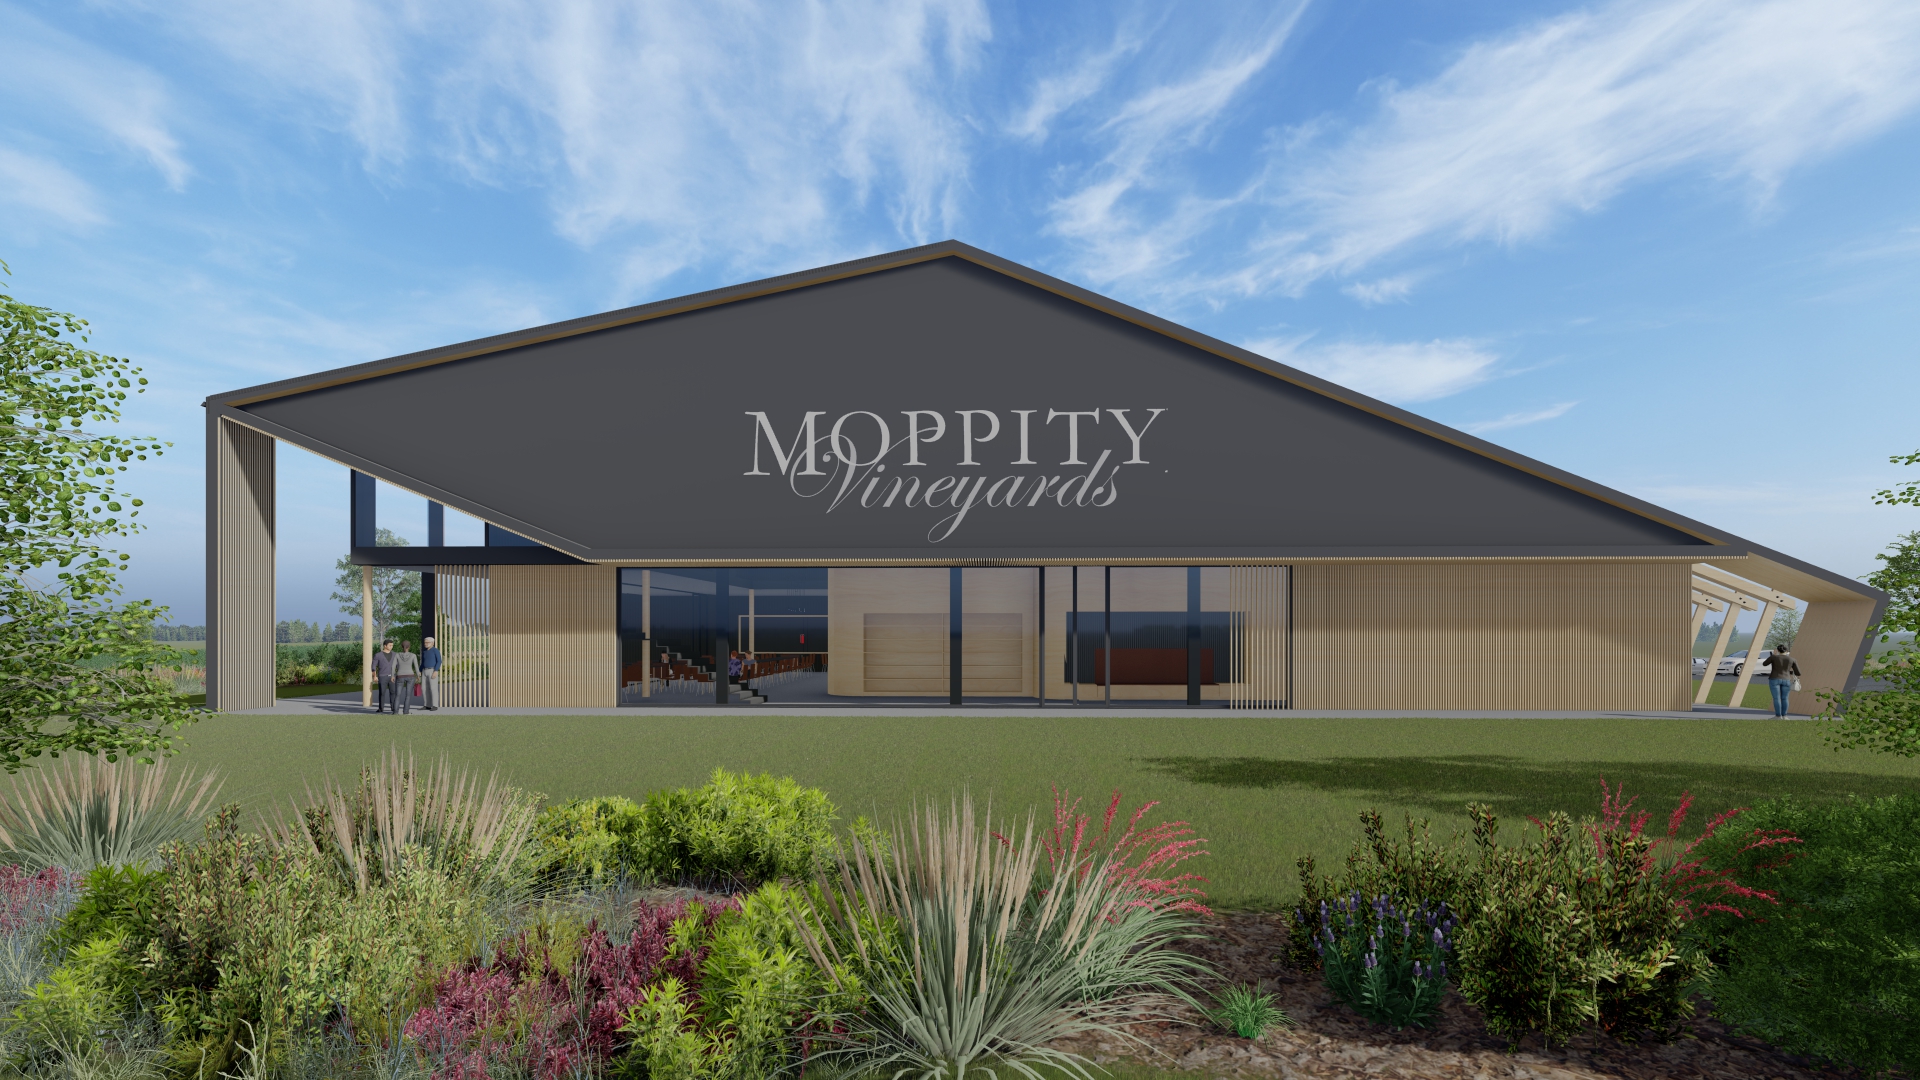 Moppity Vineyards toasts $5 million Barton Highway development